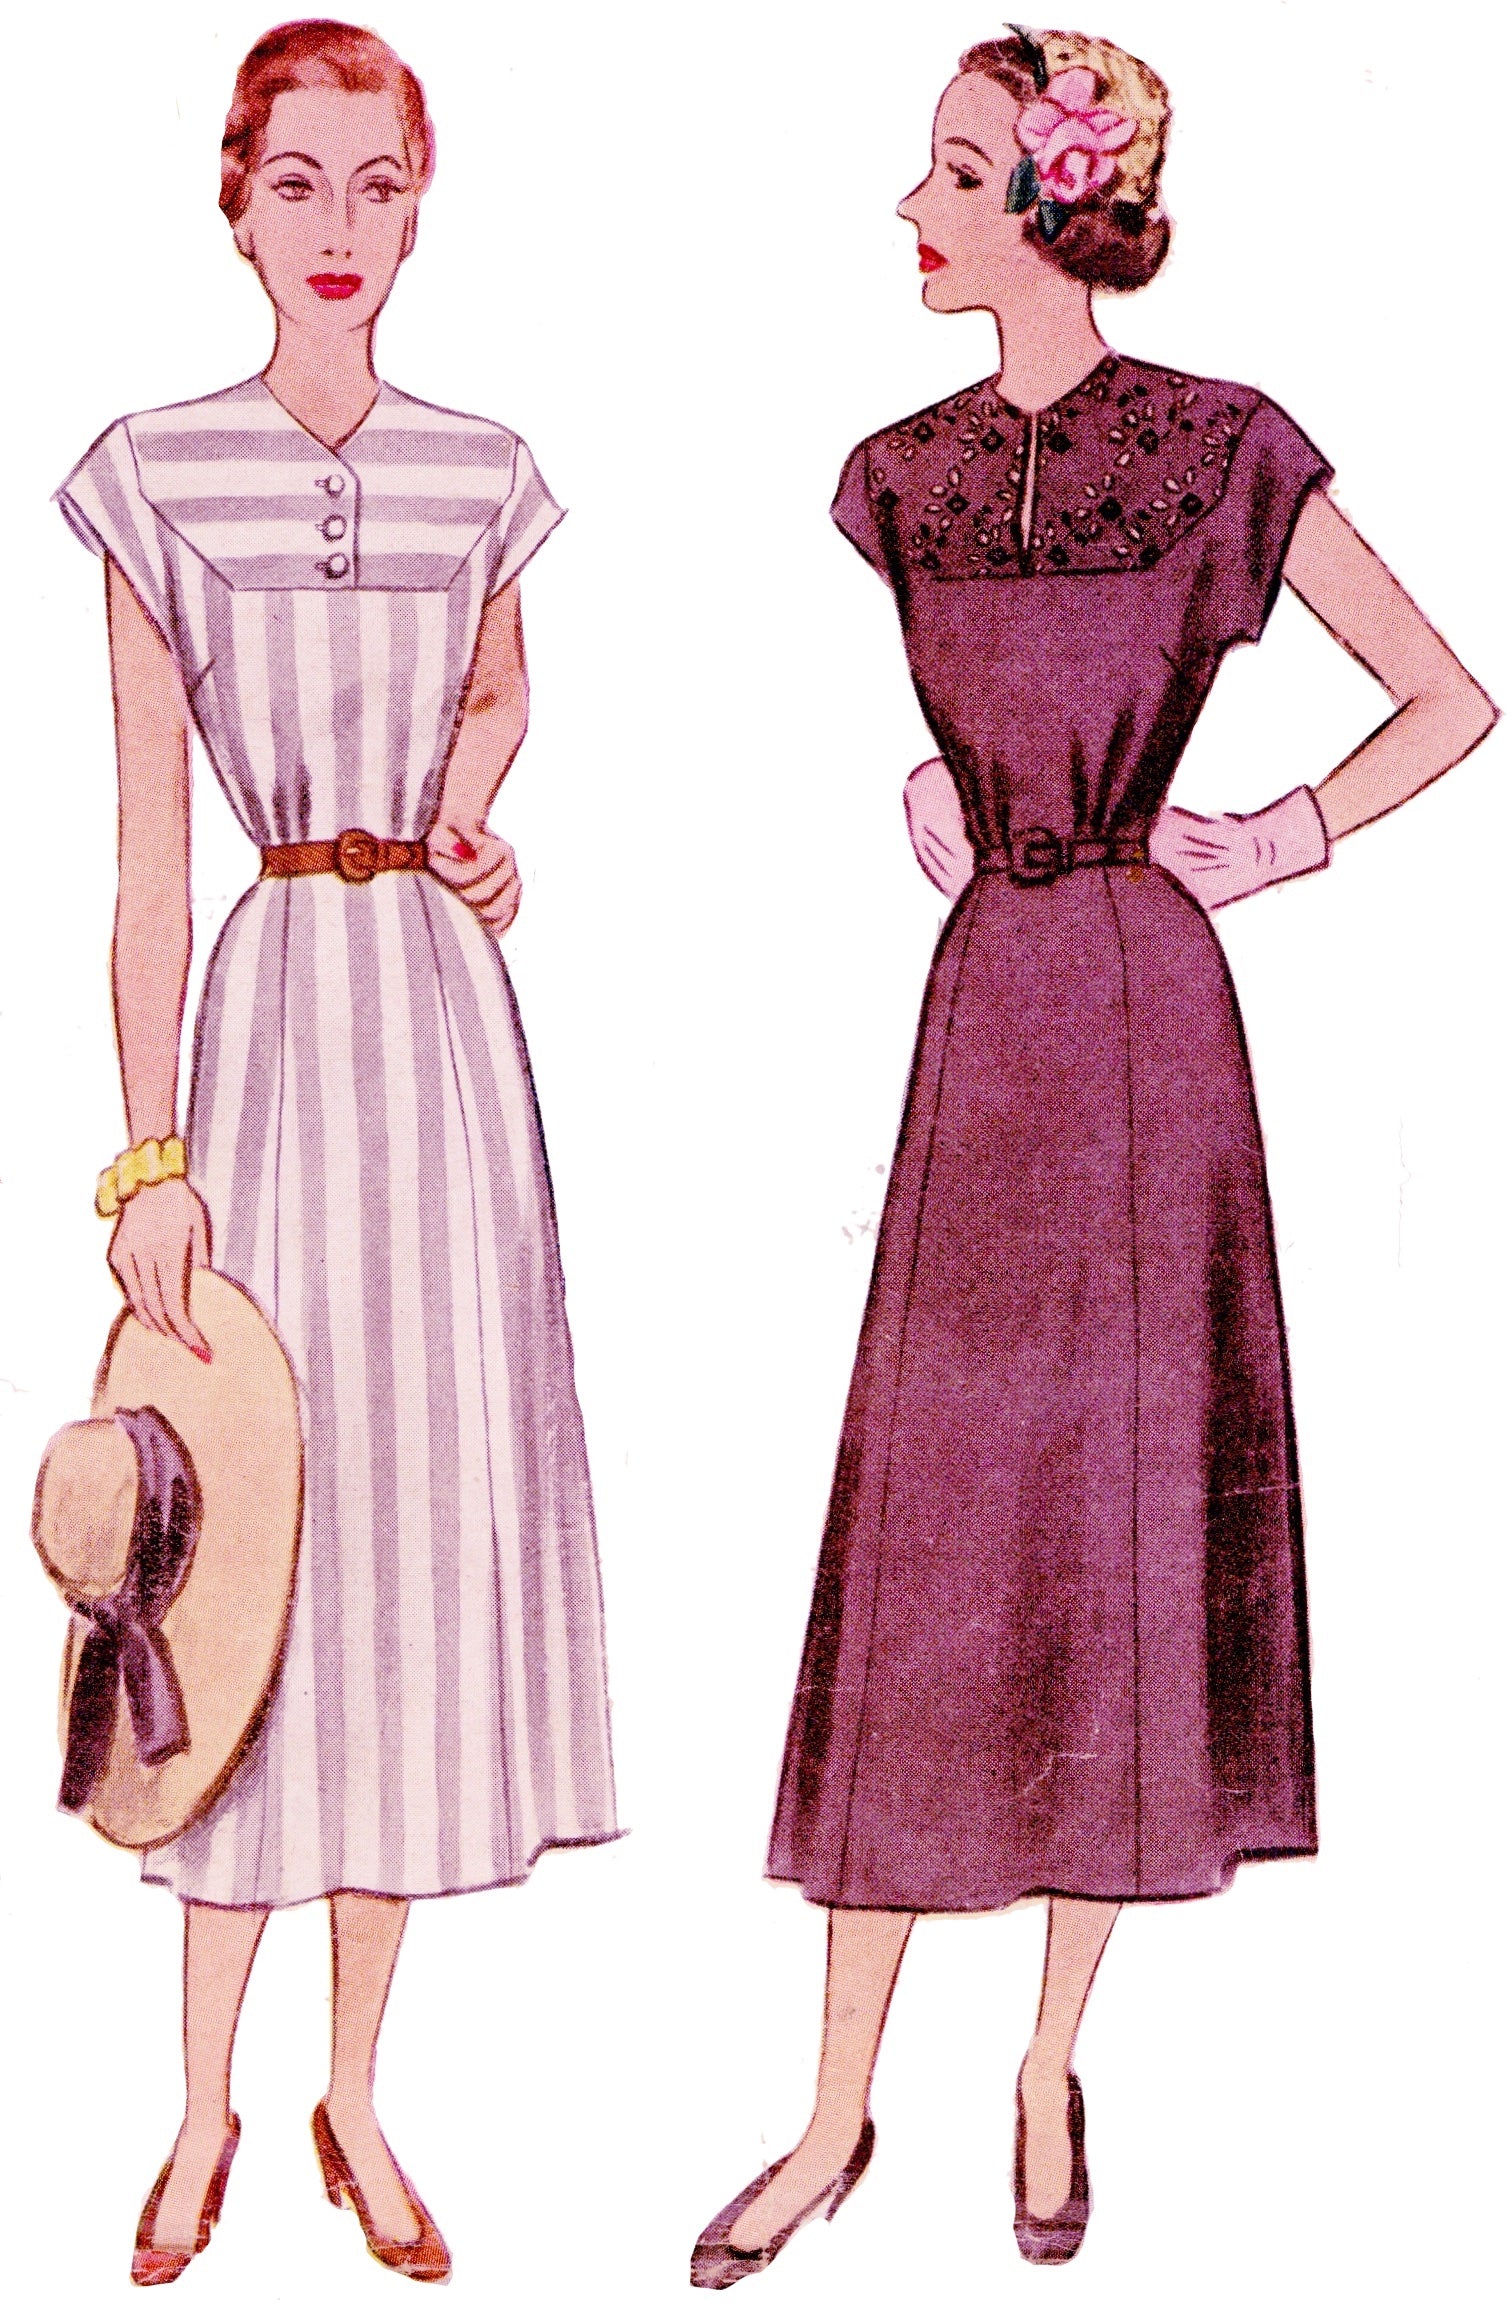 # 7298 Yoked Dress (1948) FULL SIZED PRINT